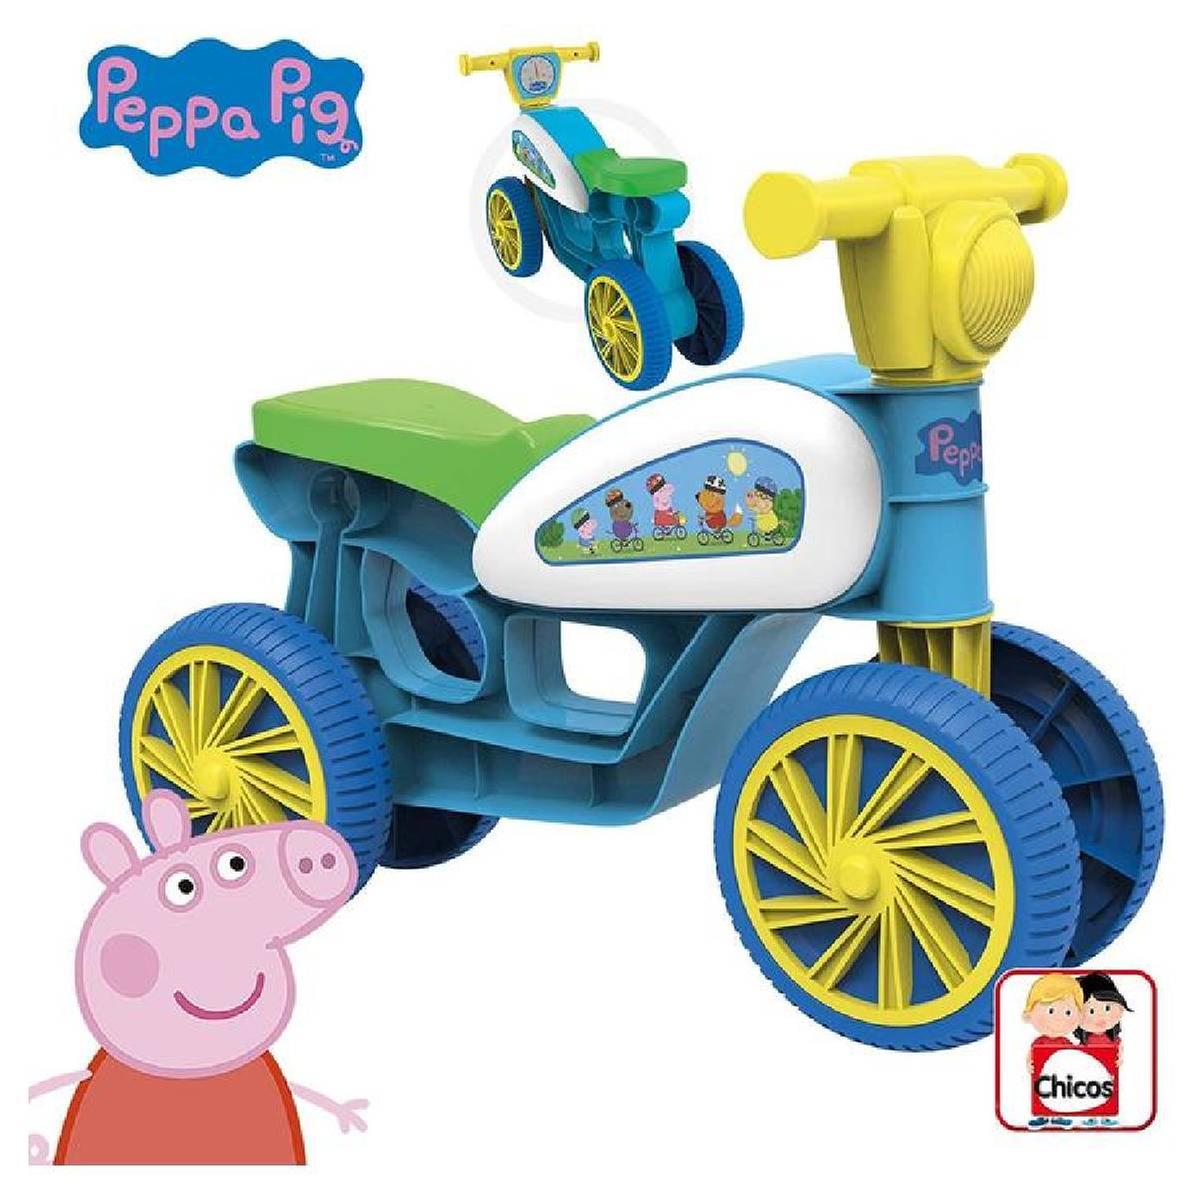 Peppa Pig - Correpasillos mini custom | Rideon | Toys"R"Us España